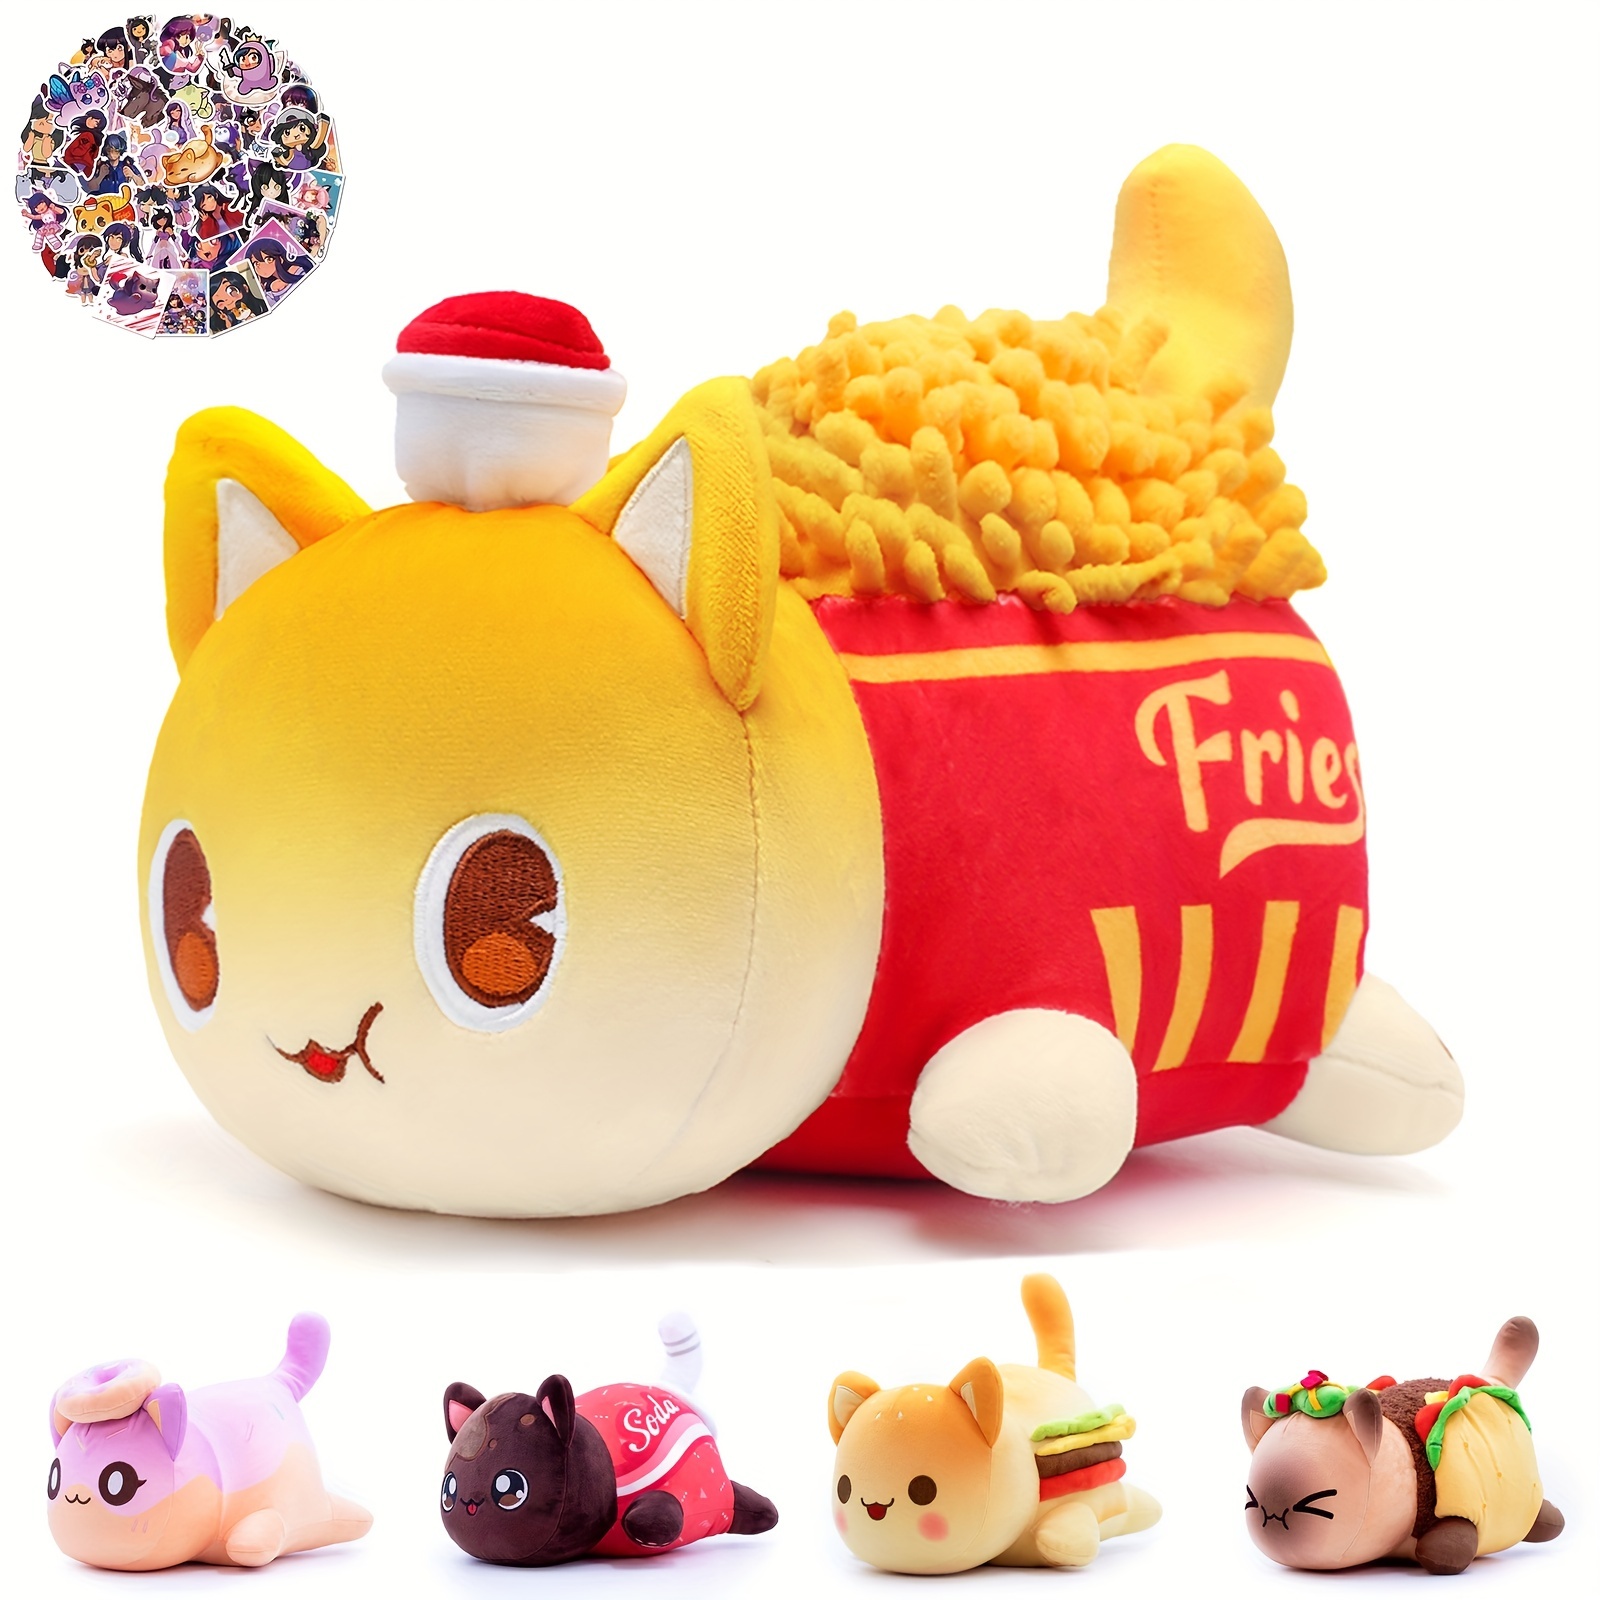 Aphmau Meows Cat Plush Toy Soft Meemeow Stuffed Donut Cat Plushes